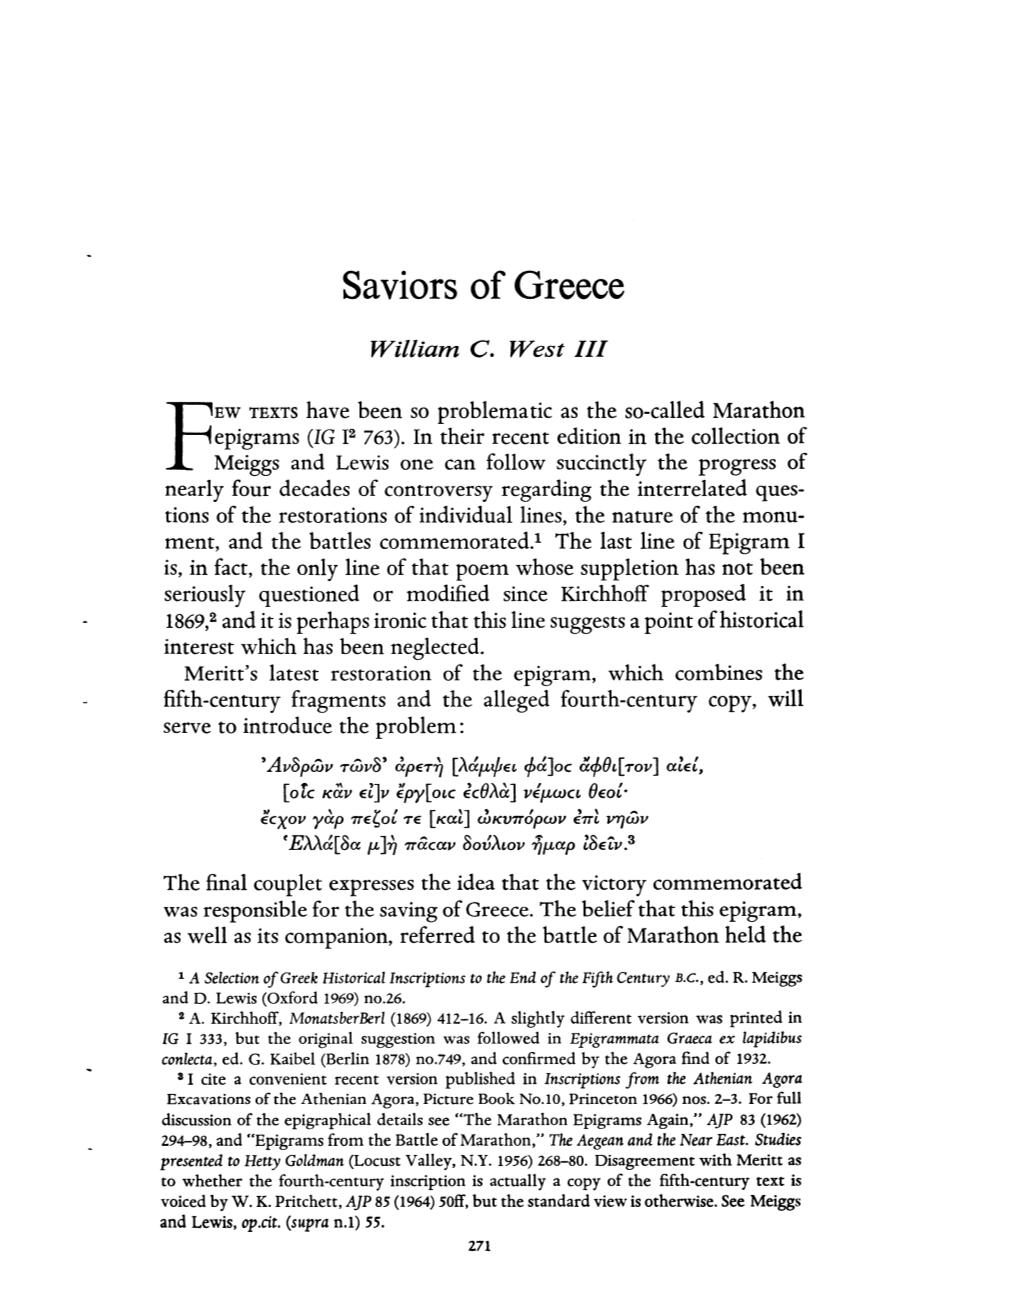 Saviors of Greece West, William C Greek, Roman and Byzantine Studies; Winter 1970; 11, 4; Proquest Pg